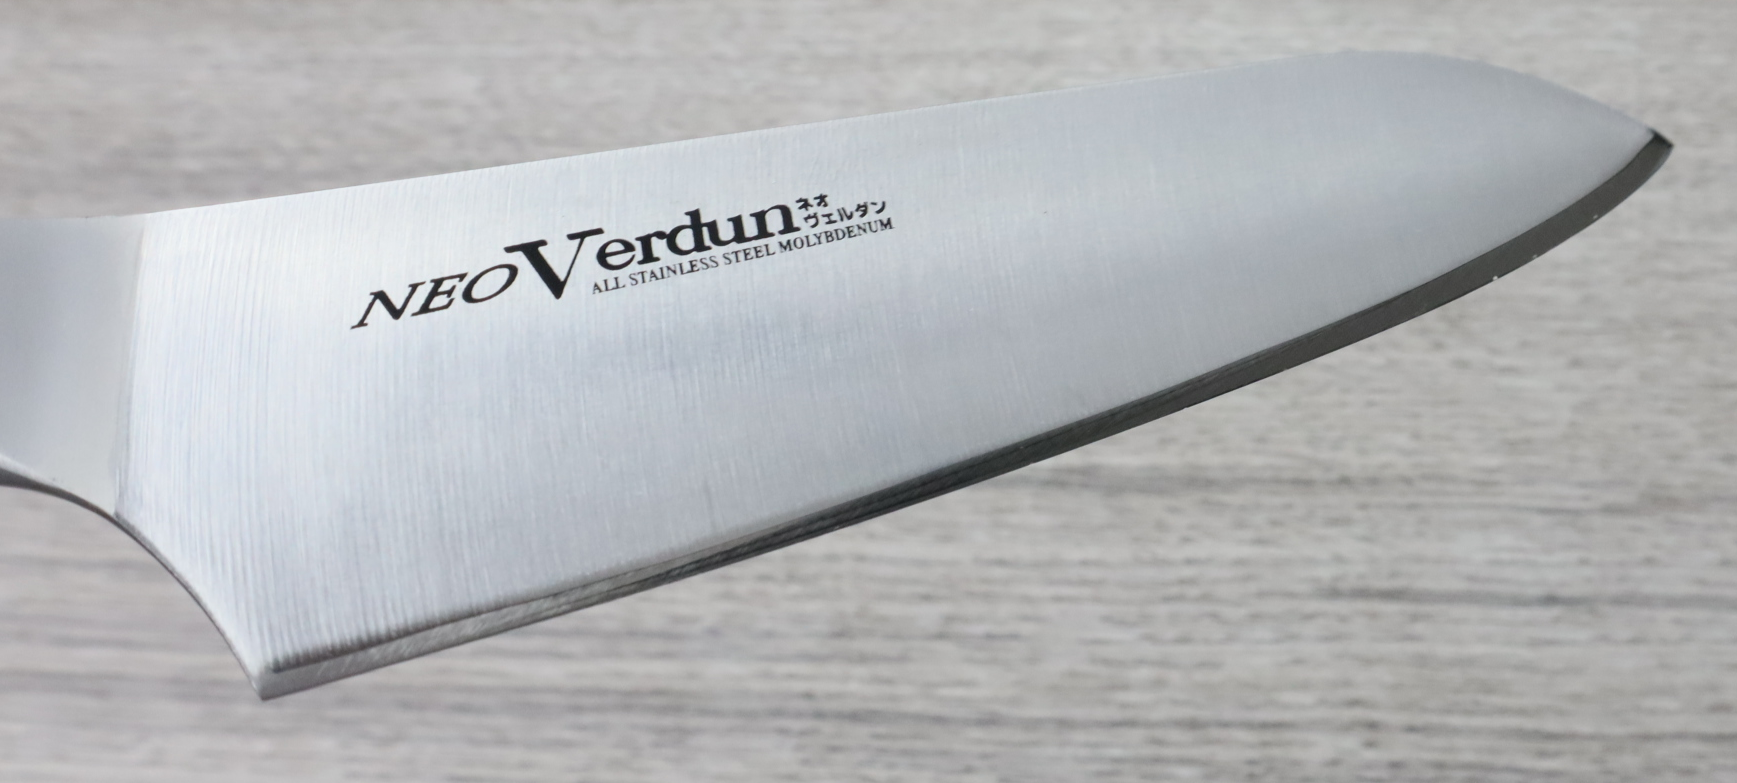 Neo Verdun Santoku Knife 165mm